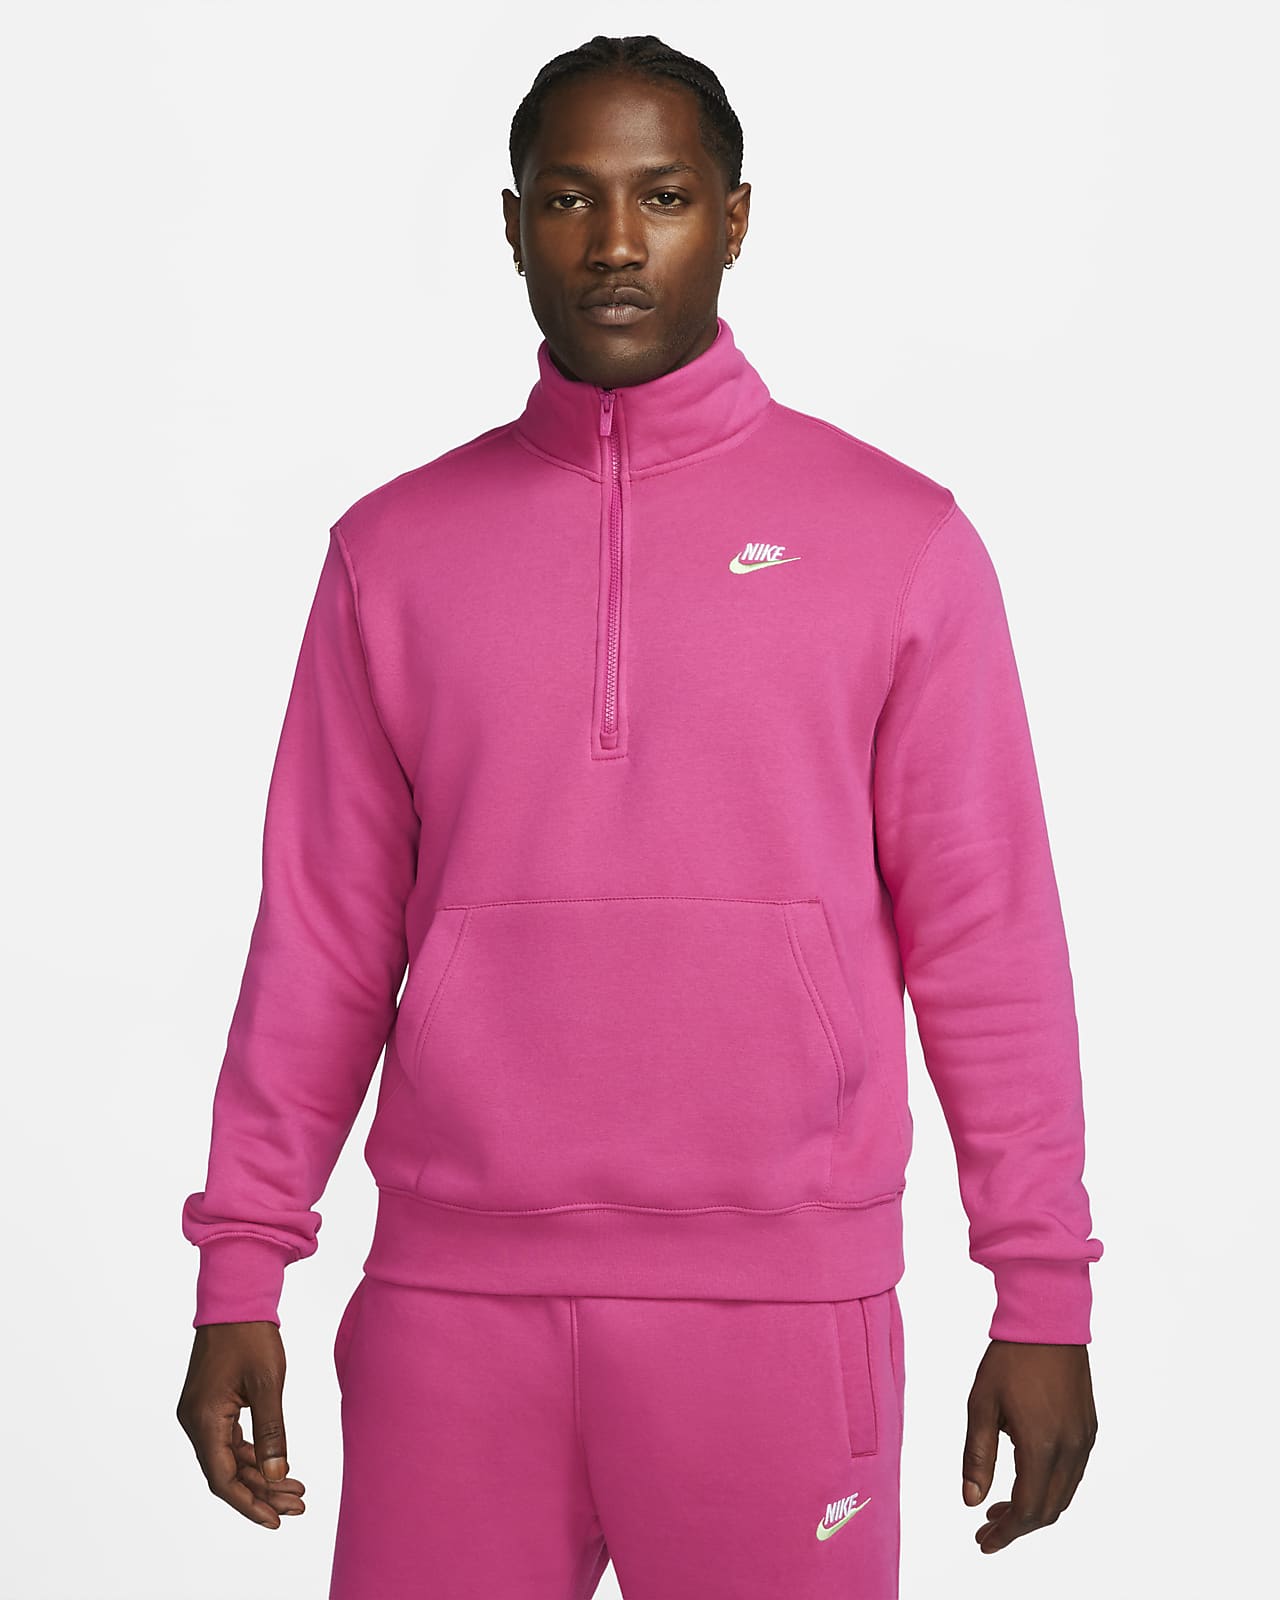 Nike Sportswear Men's Fleece Half-Zip Top